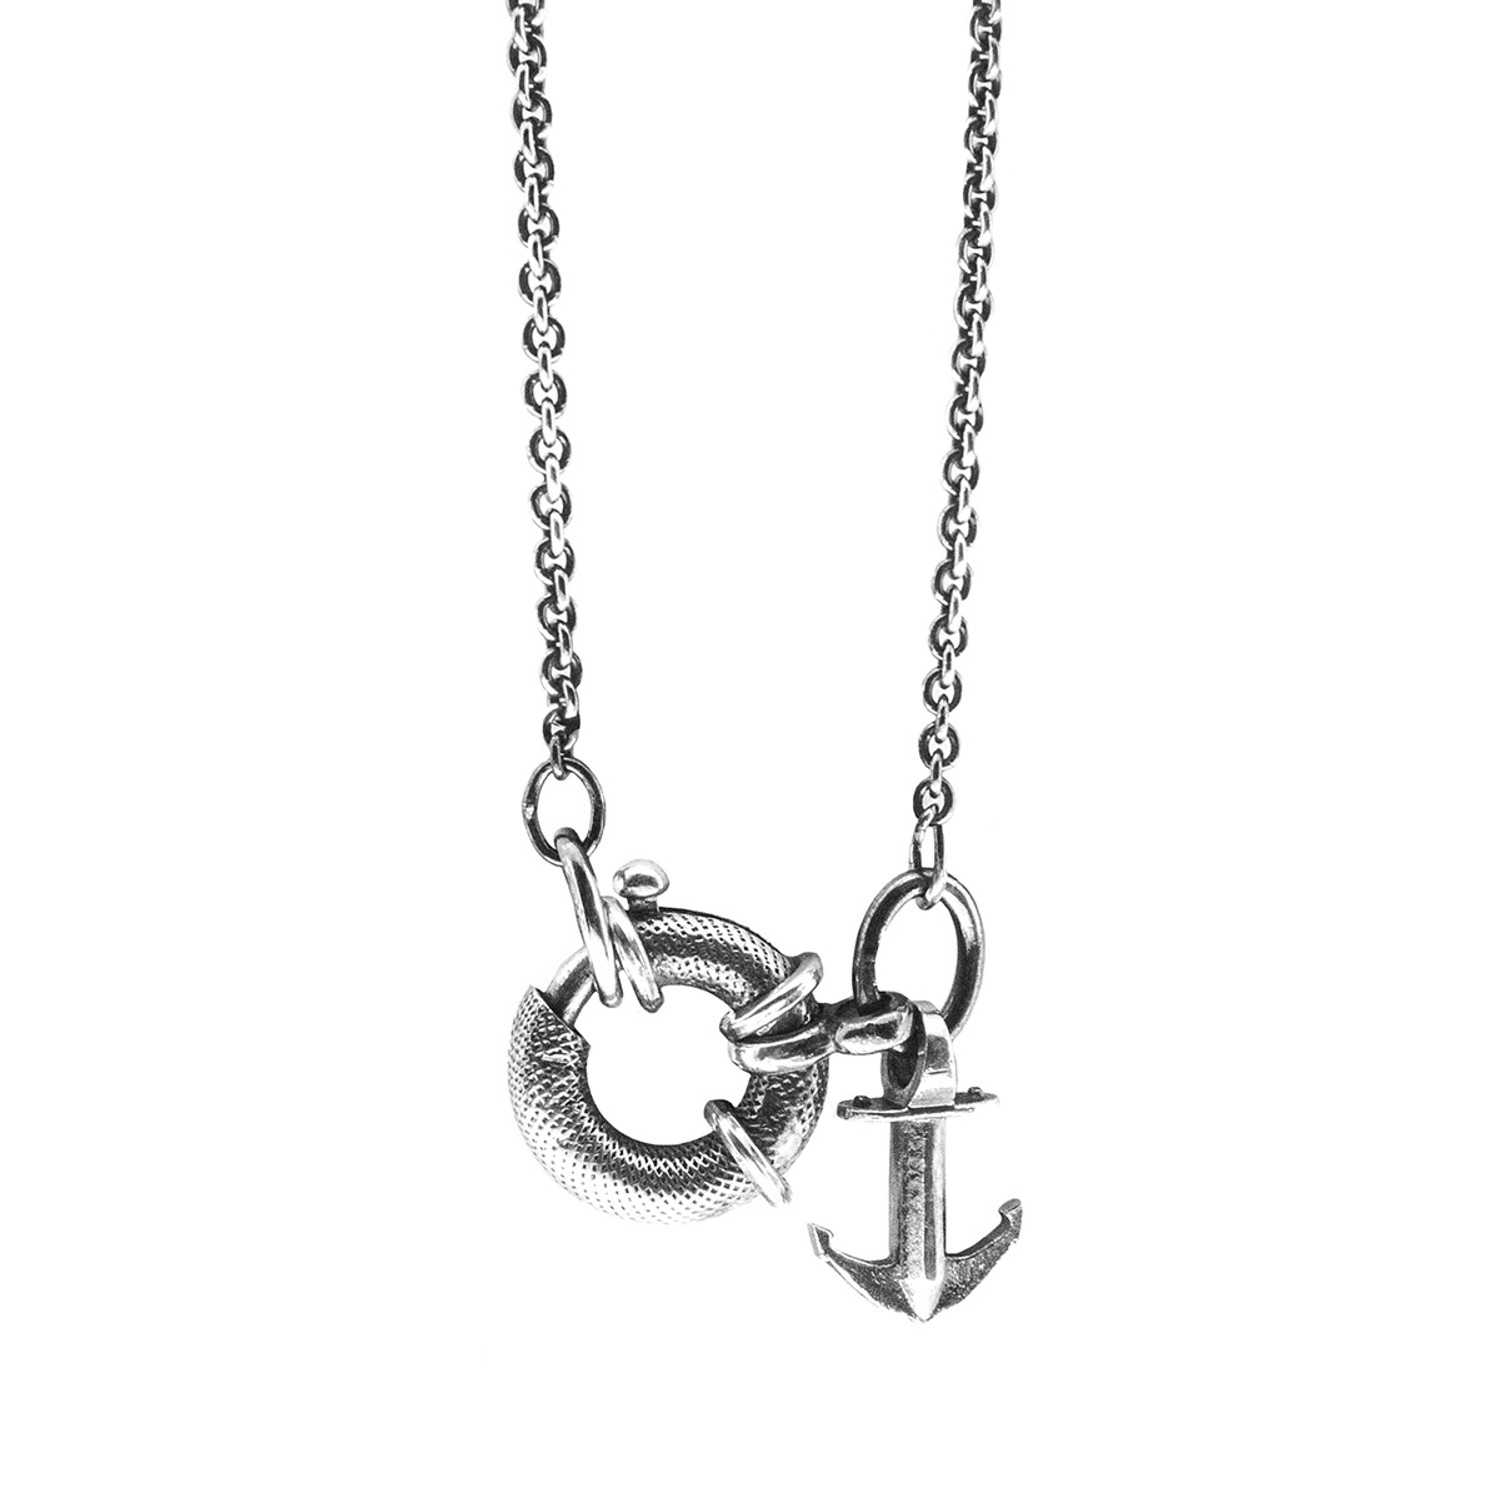 Anchor & Crew Clyde Signature Silver Necklace Pendant